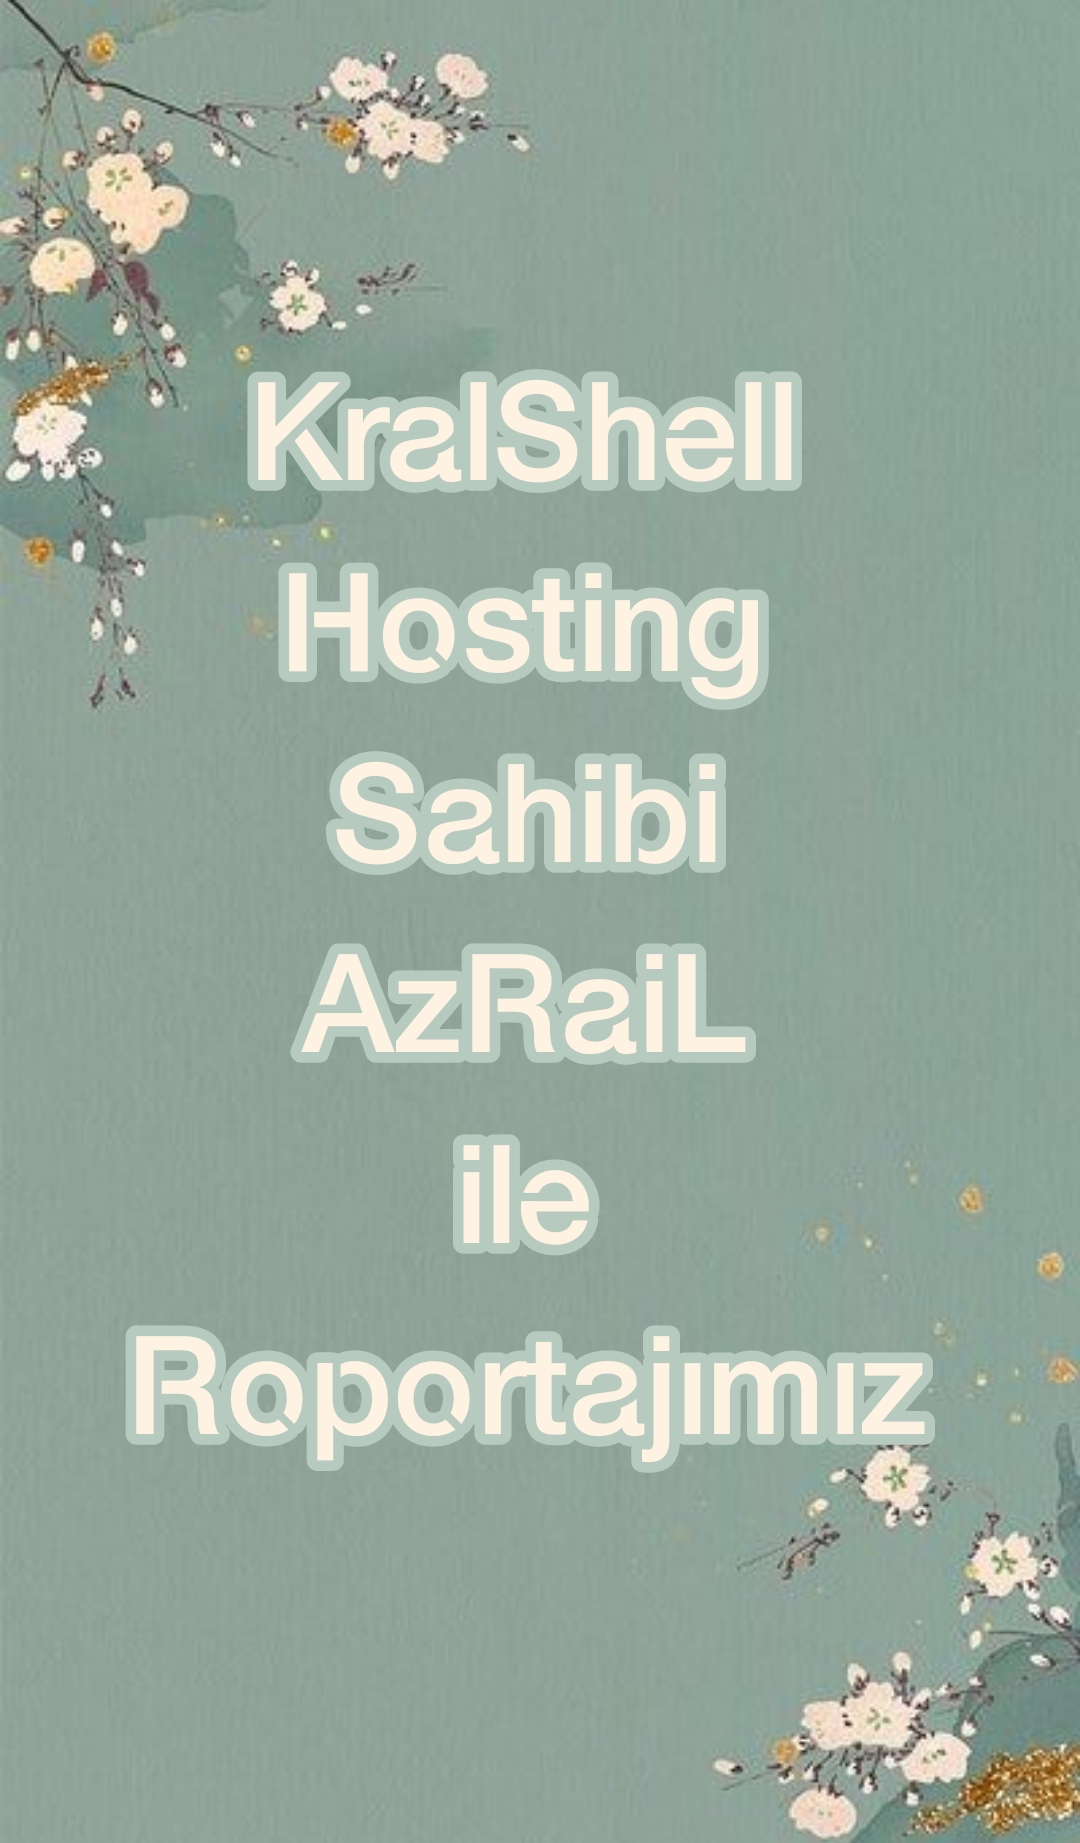 KralShell Hosting Sahibi AzRaiL ile Rportajmz